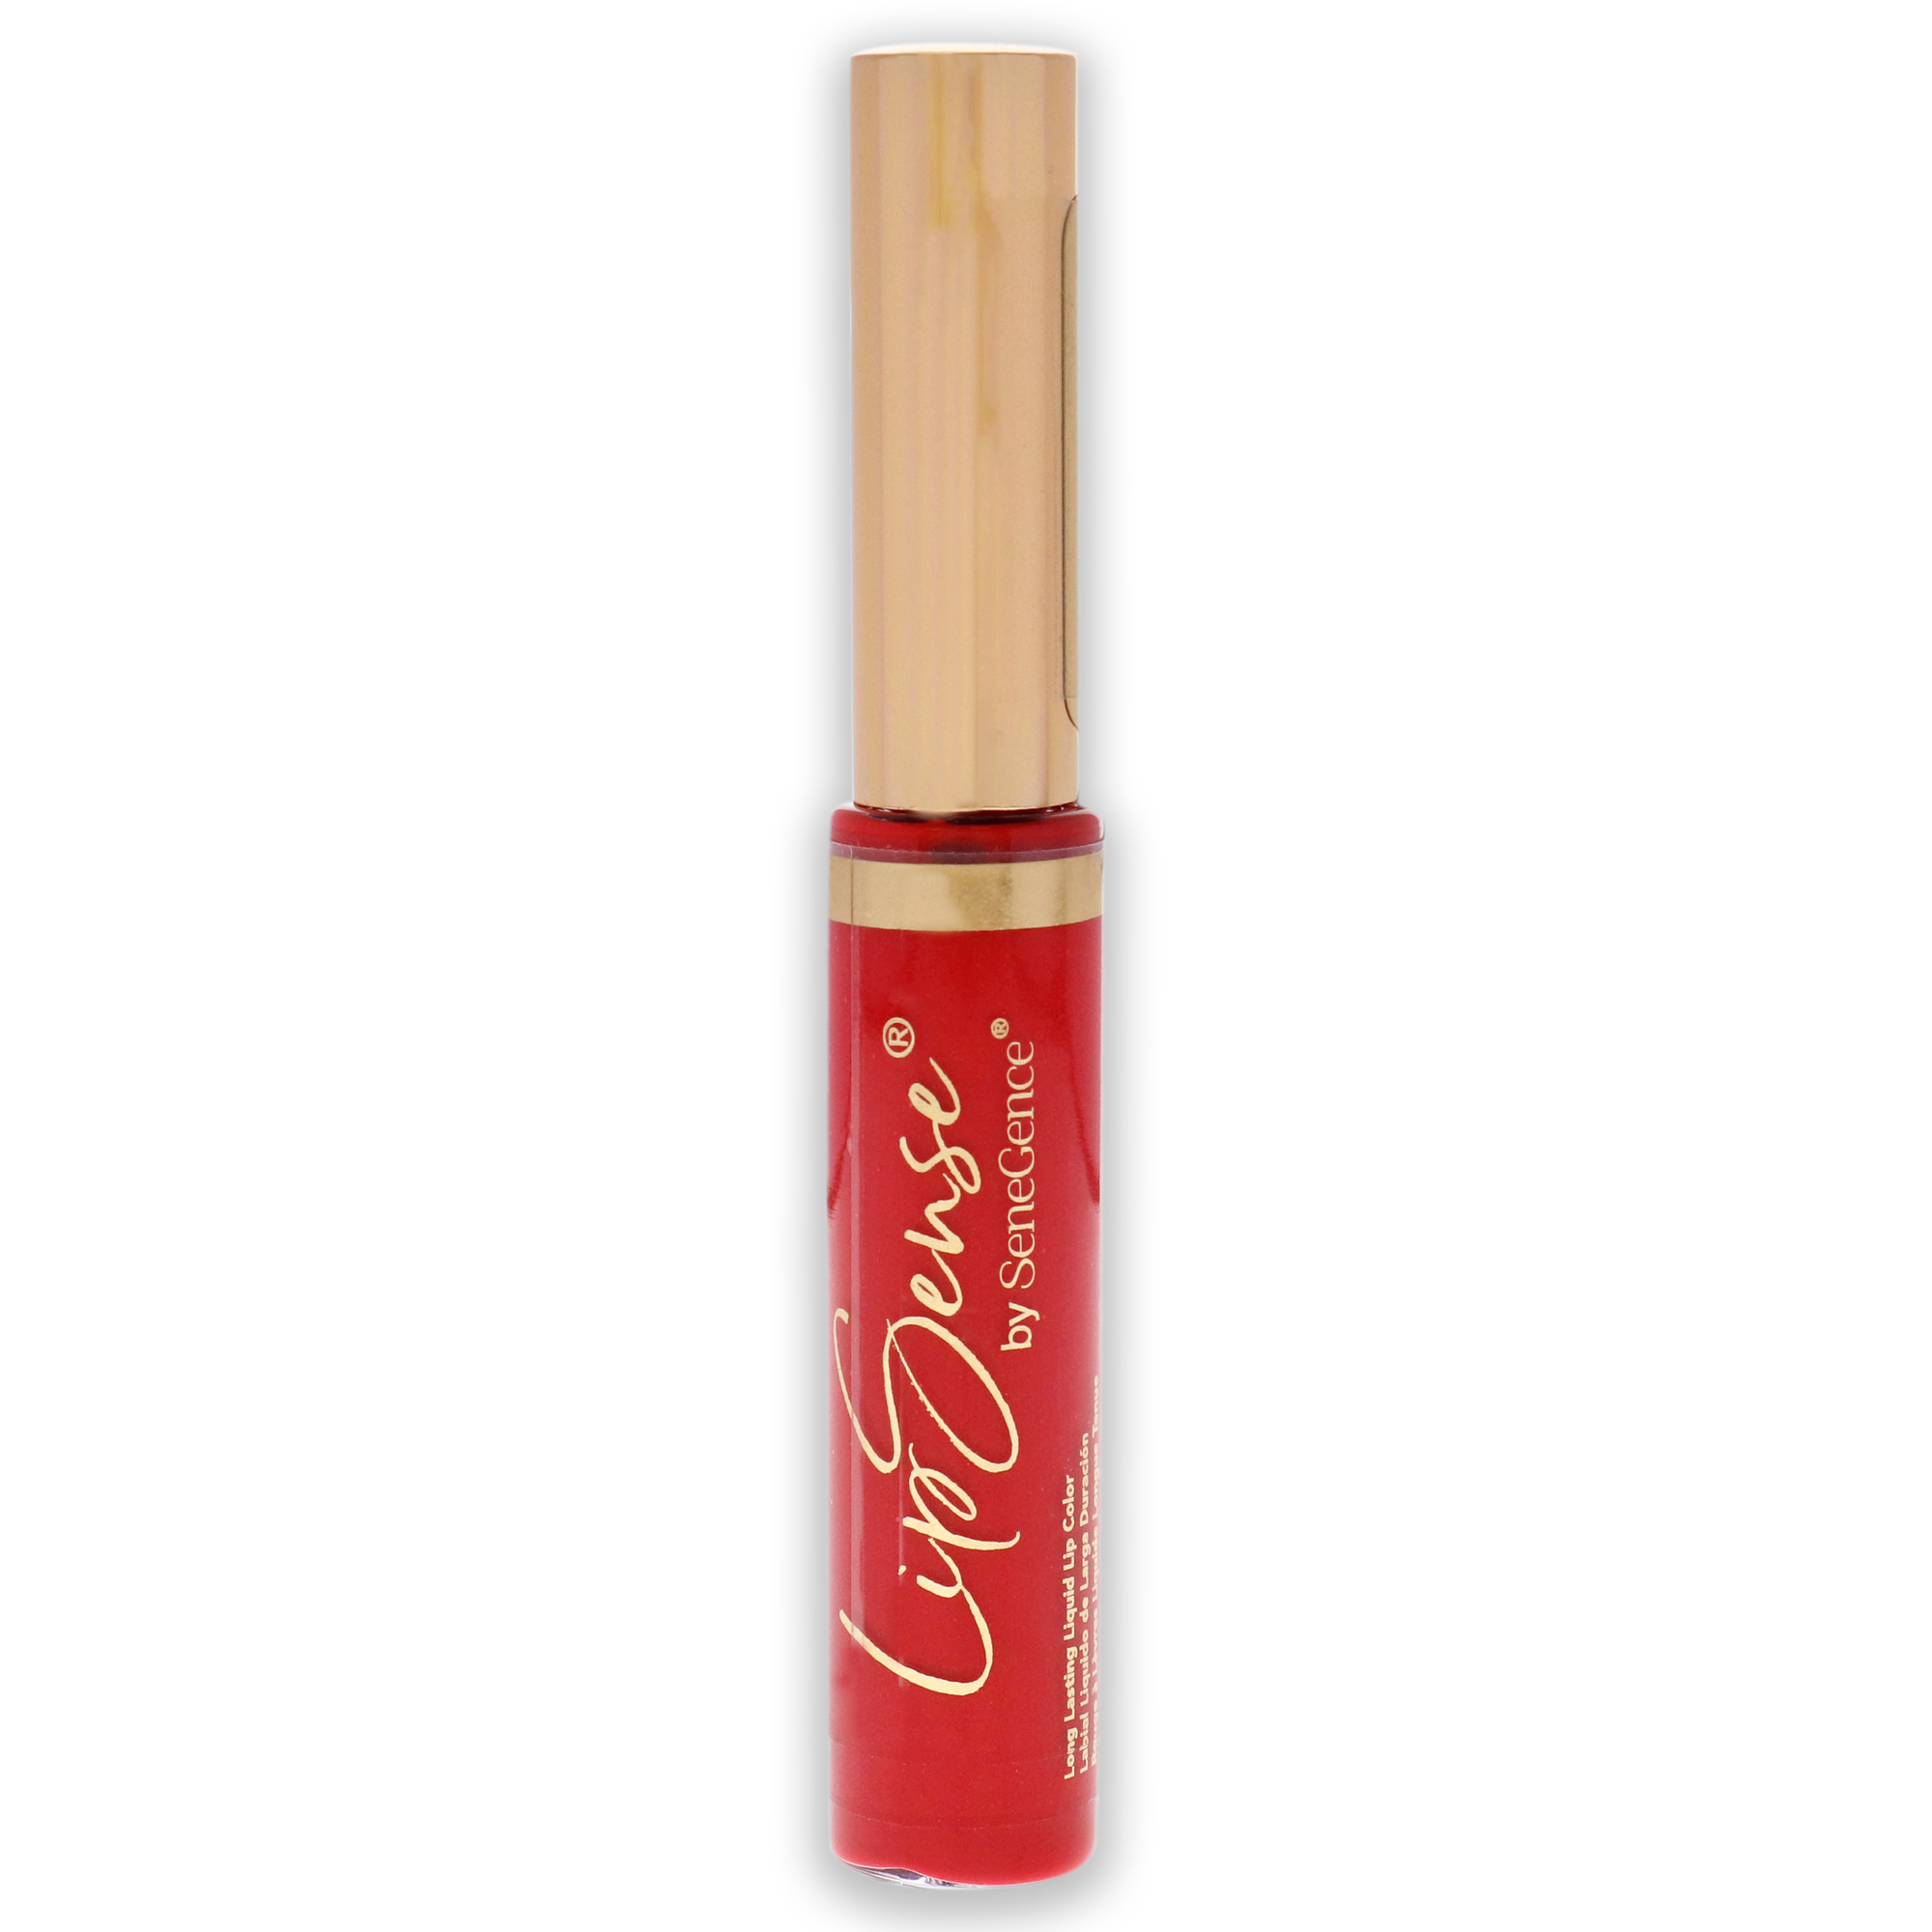 LipSense Liquid Lip Color - Rhubarb by SeneGence for Women - 0.25 oz Lipstick